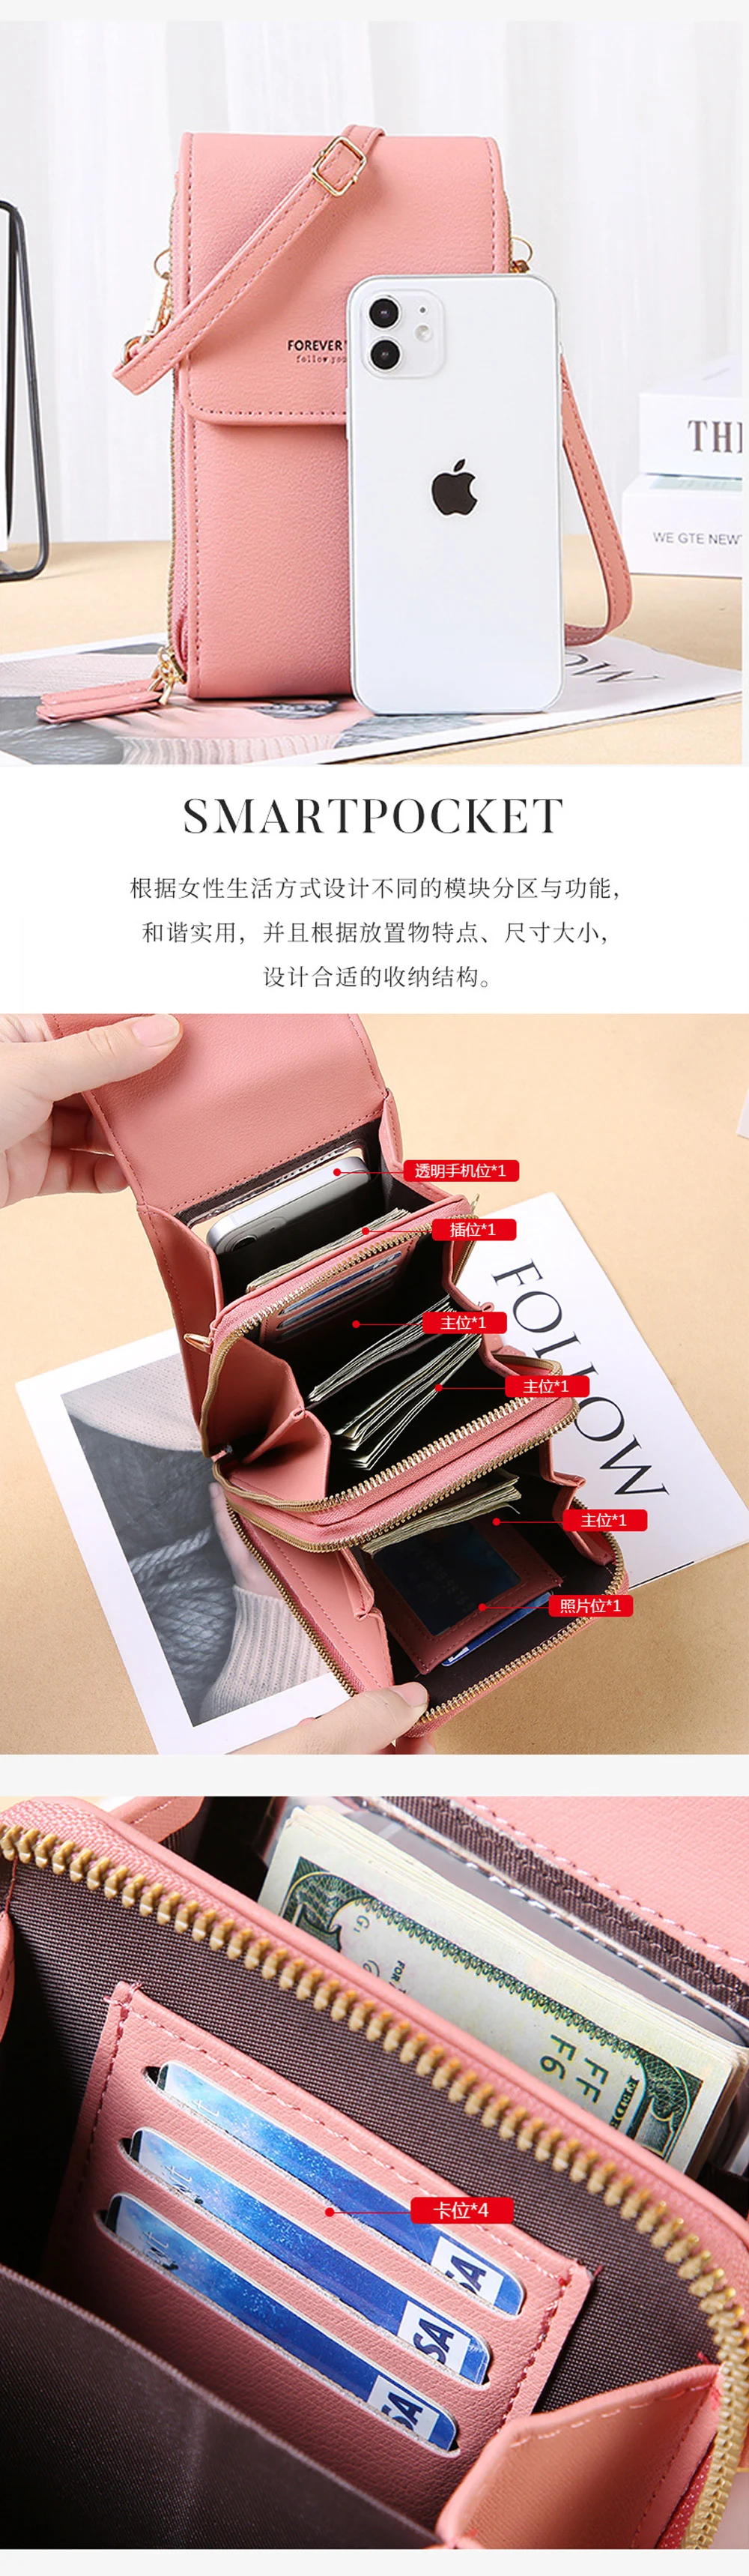 Buylor Soft Leather Women's Bag Wallets Touch Screen Cell Phone Purse Bags of Women Strap Handbag Female Crossbody Shoulder Bag